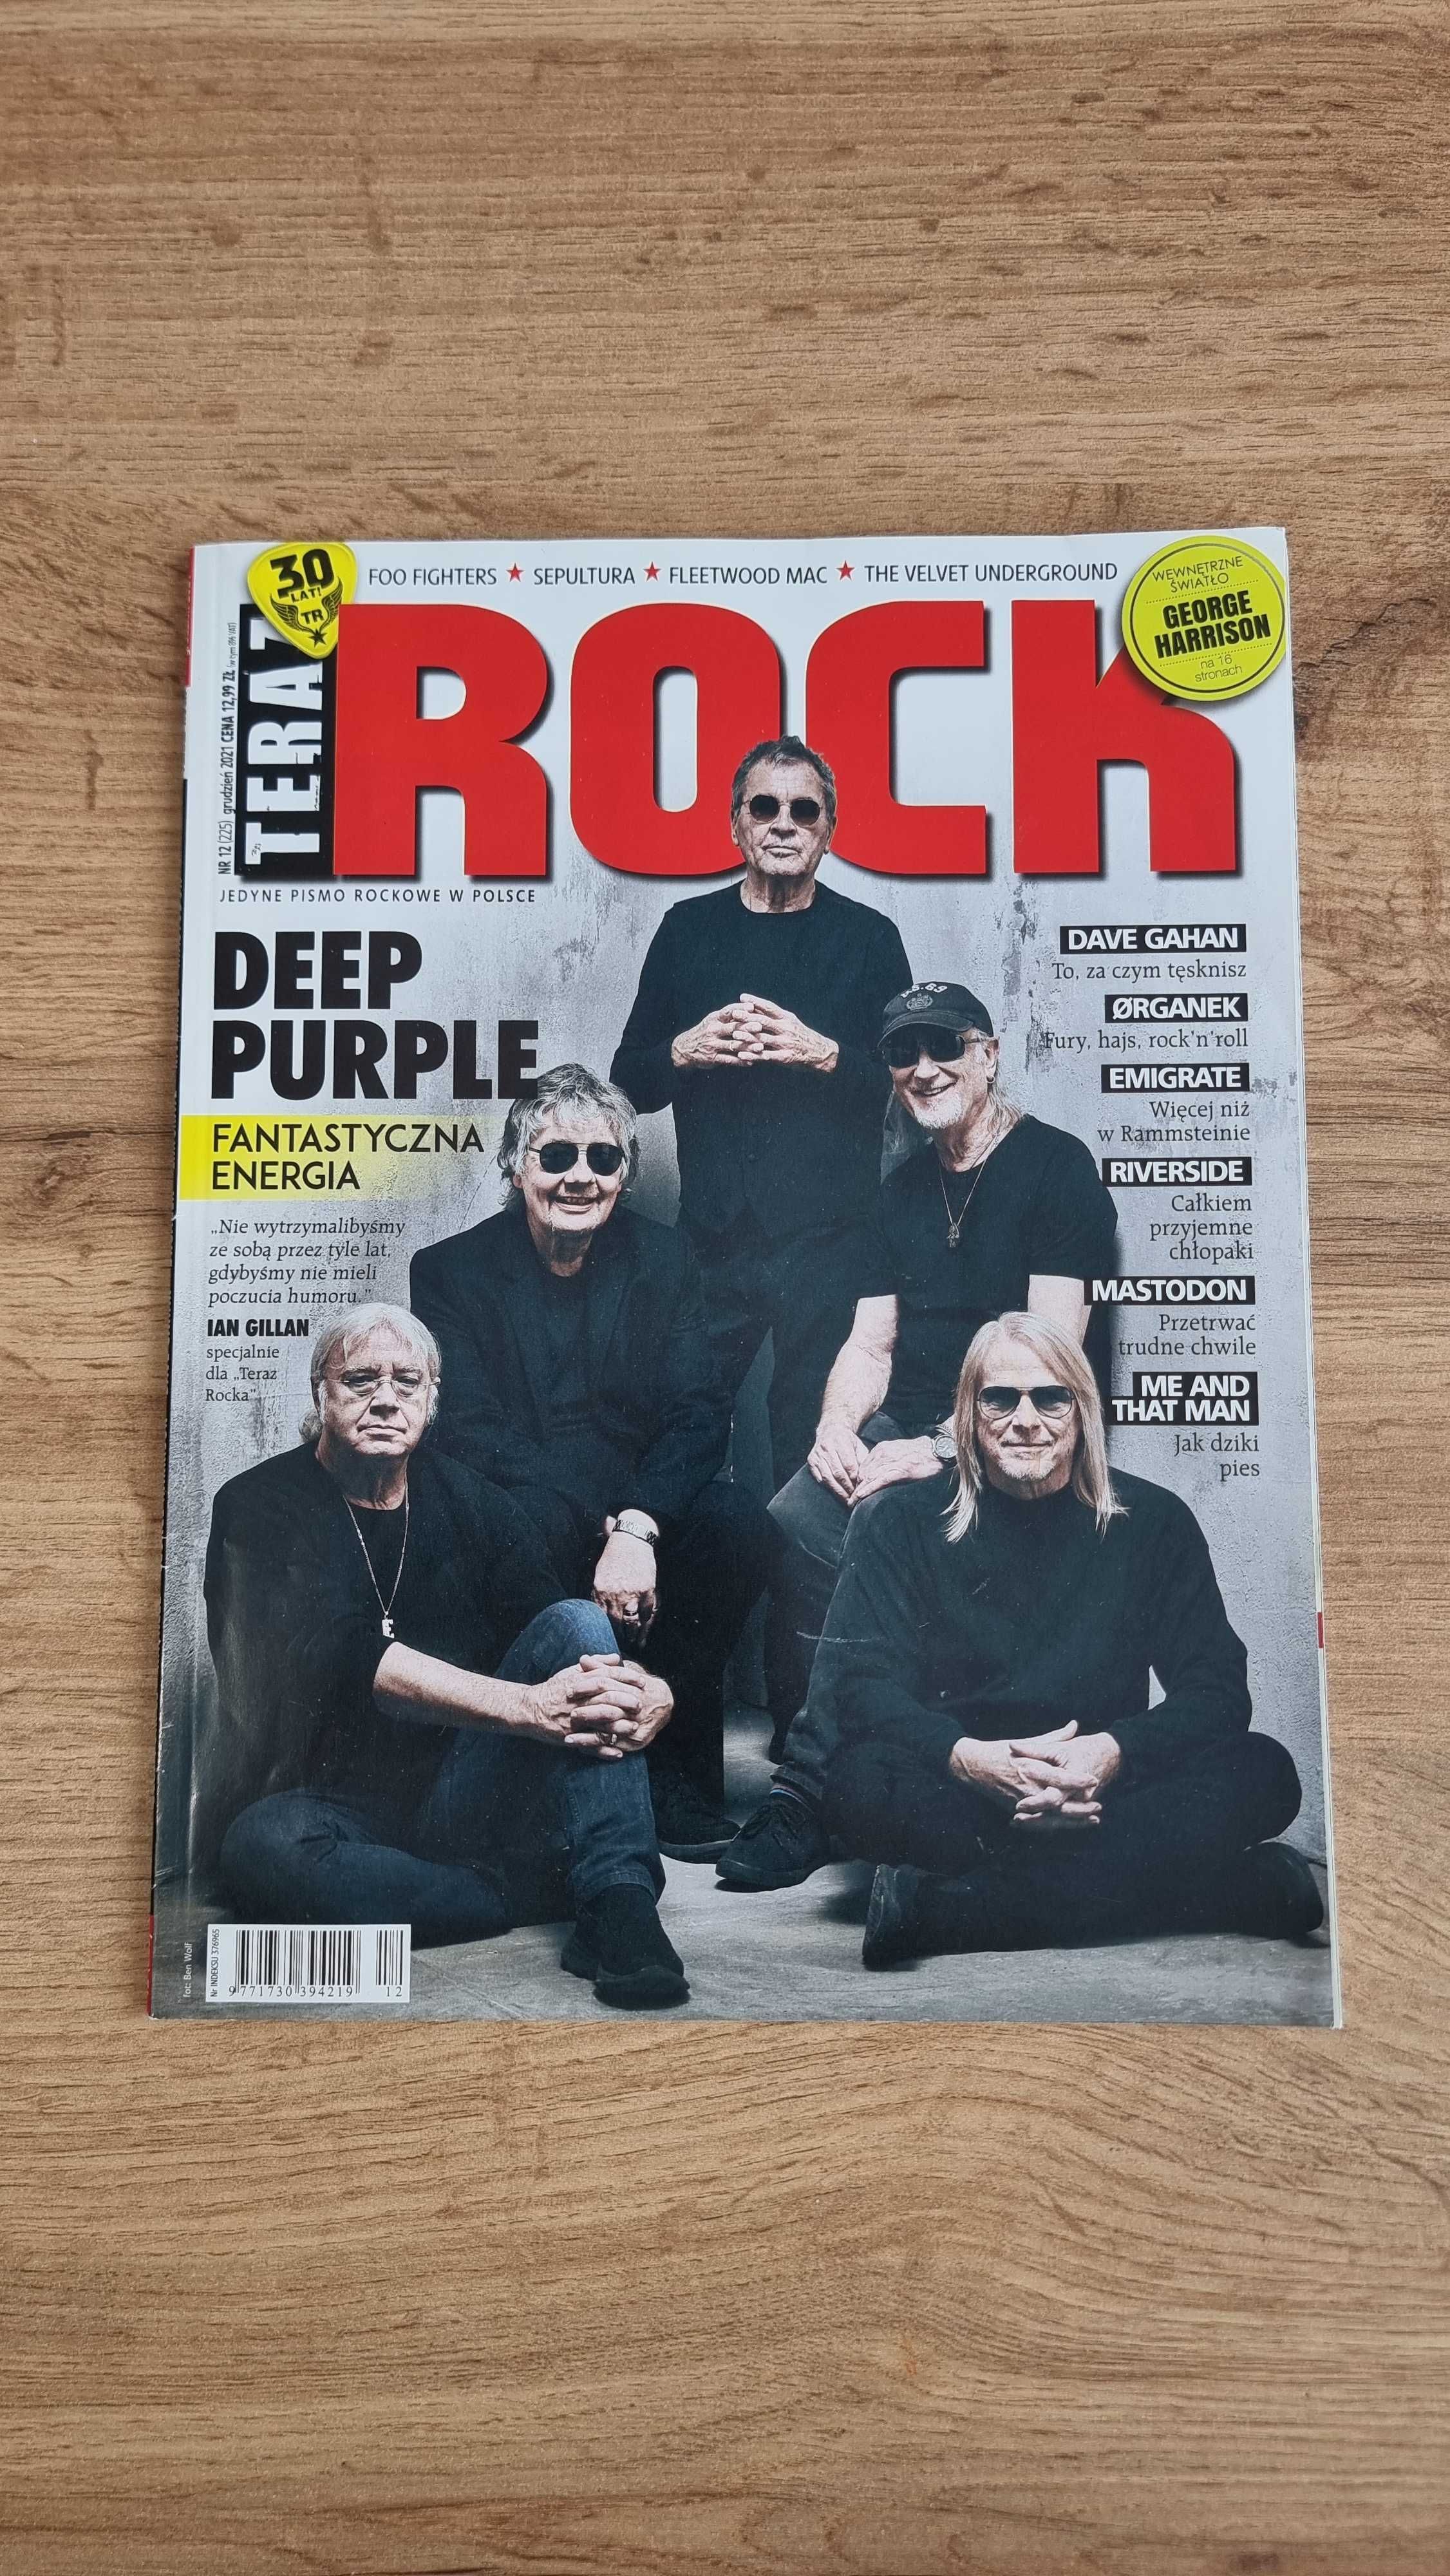 Teraz Rock 12/2021 - Deep Purple, George Harrison, Dave Gahan